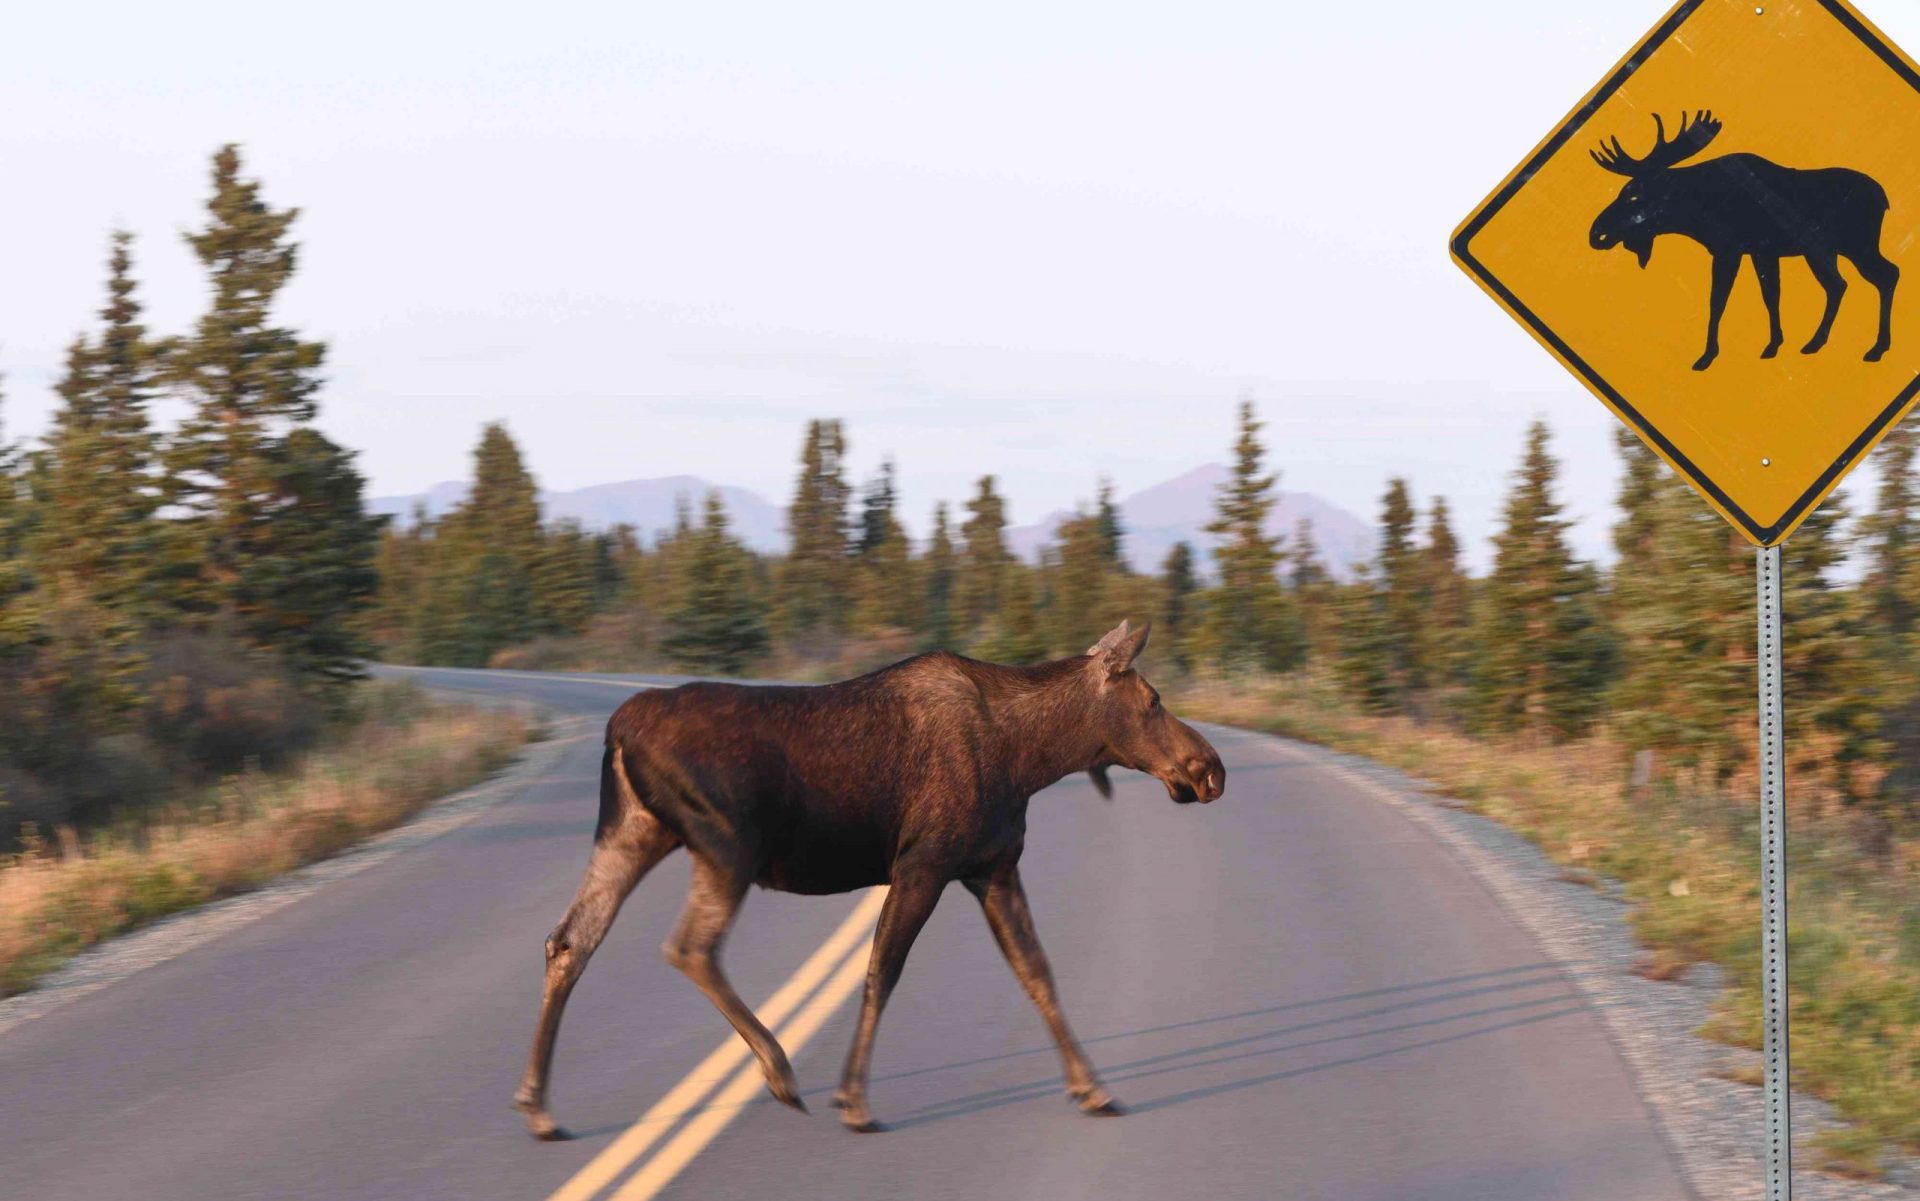 Alce cruzando la carretera en Alaska, EEUU